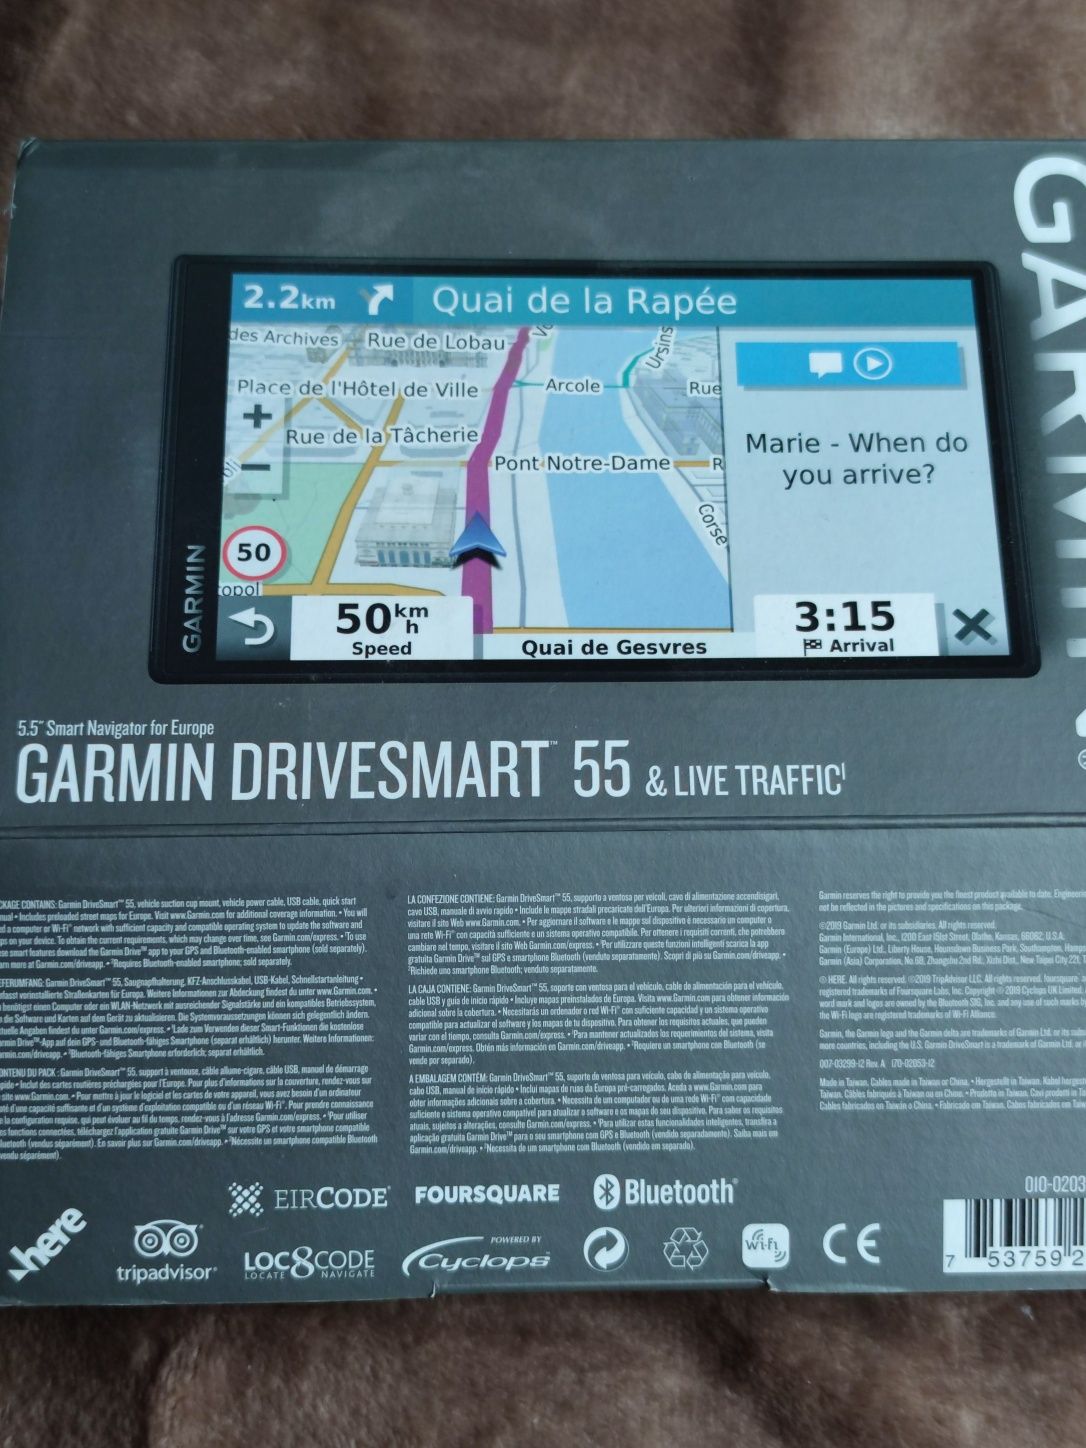 GARMIN DRIVESMART 55 & live trafic